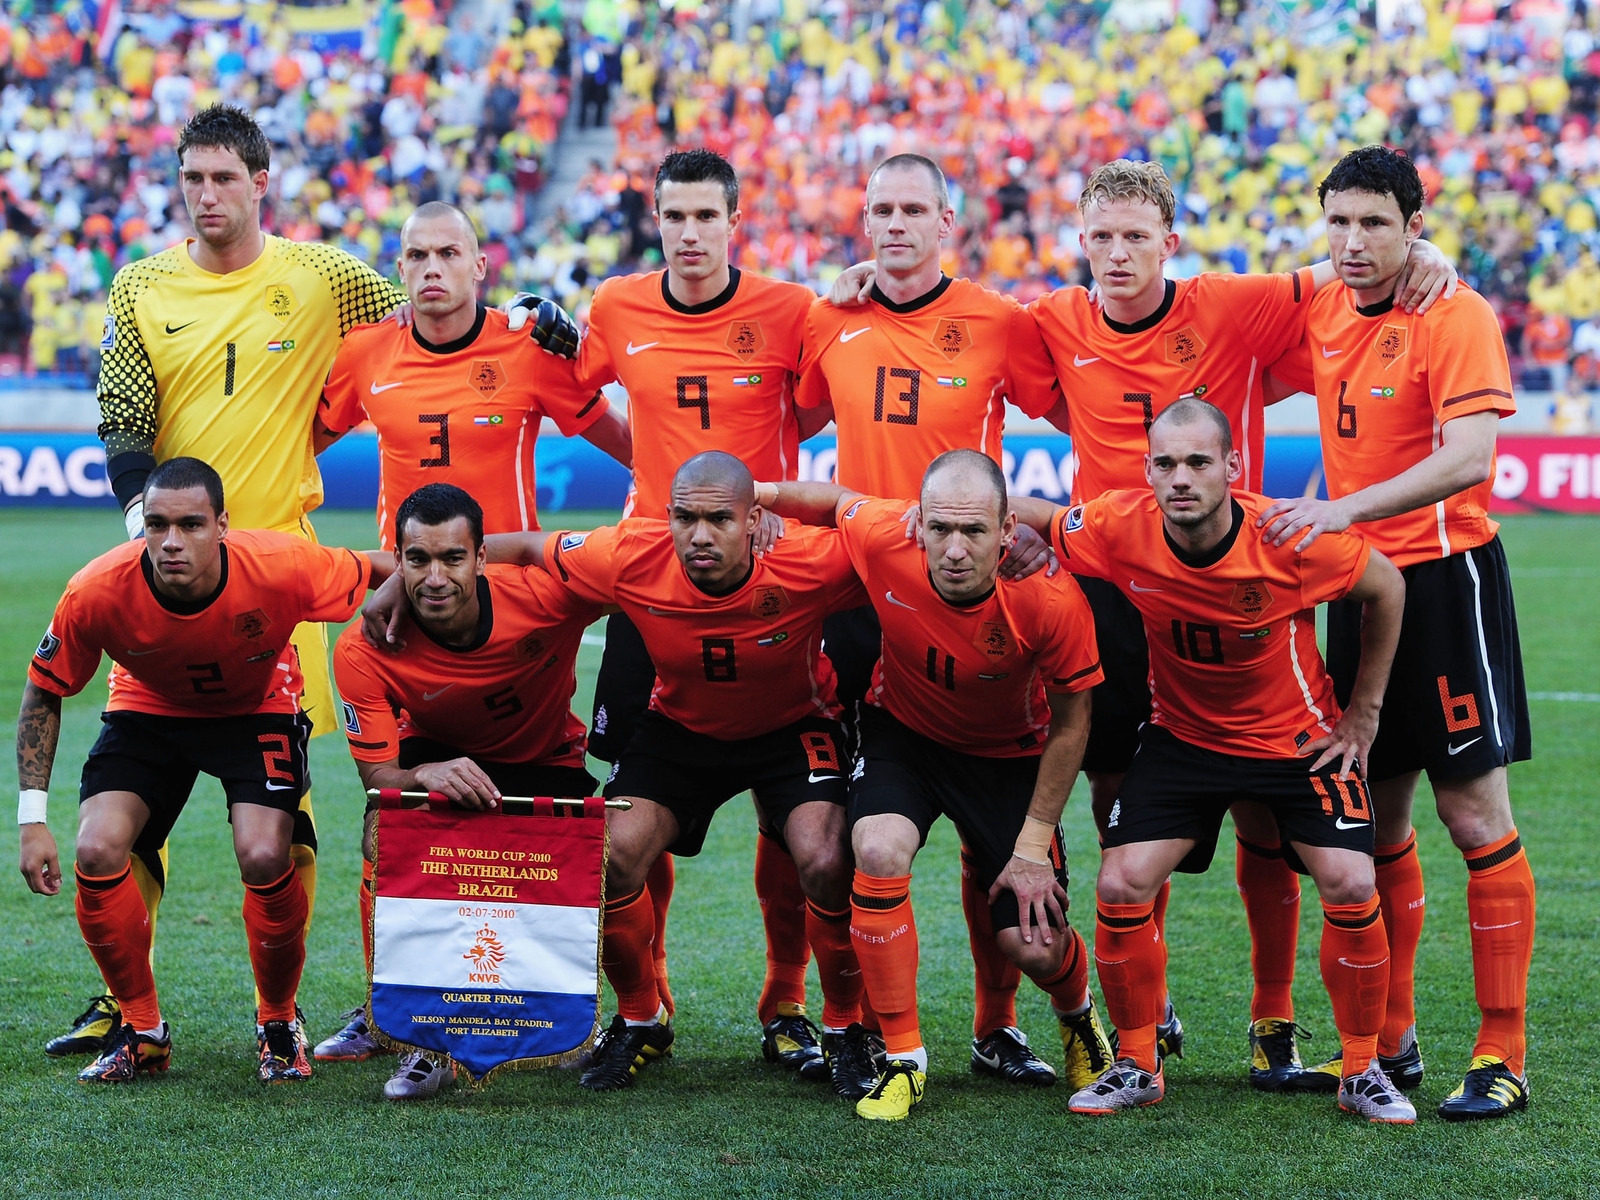 Football Holland Team for 1600 x 1200 resolution